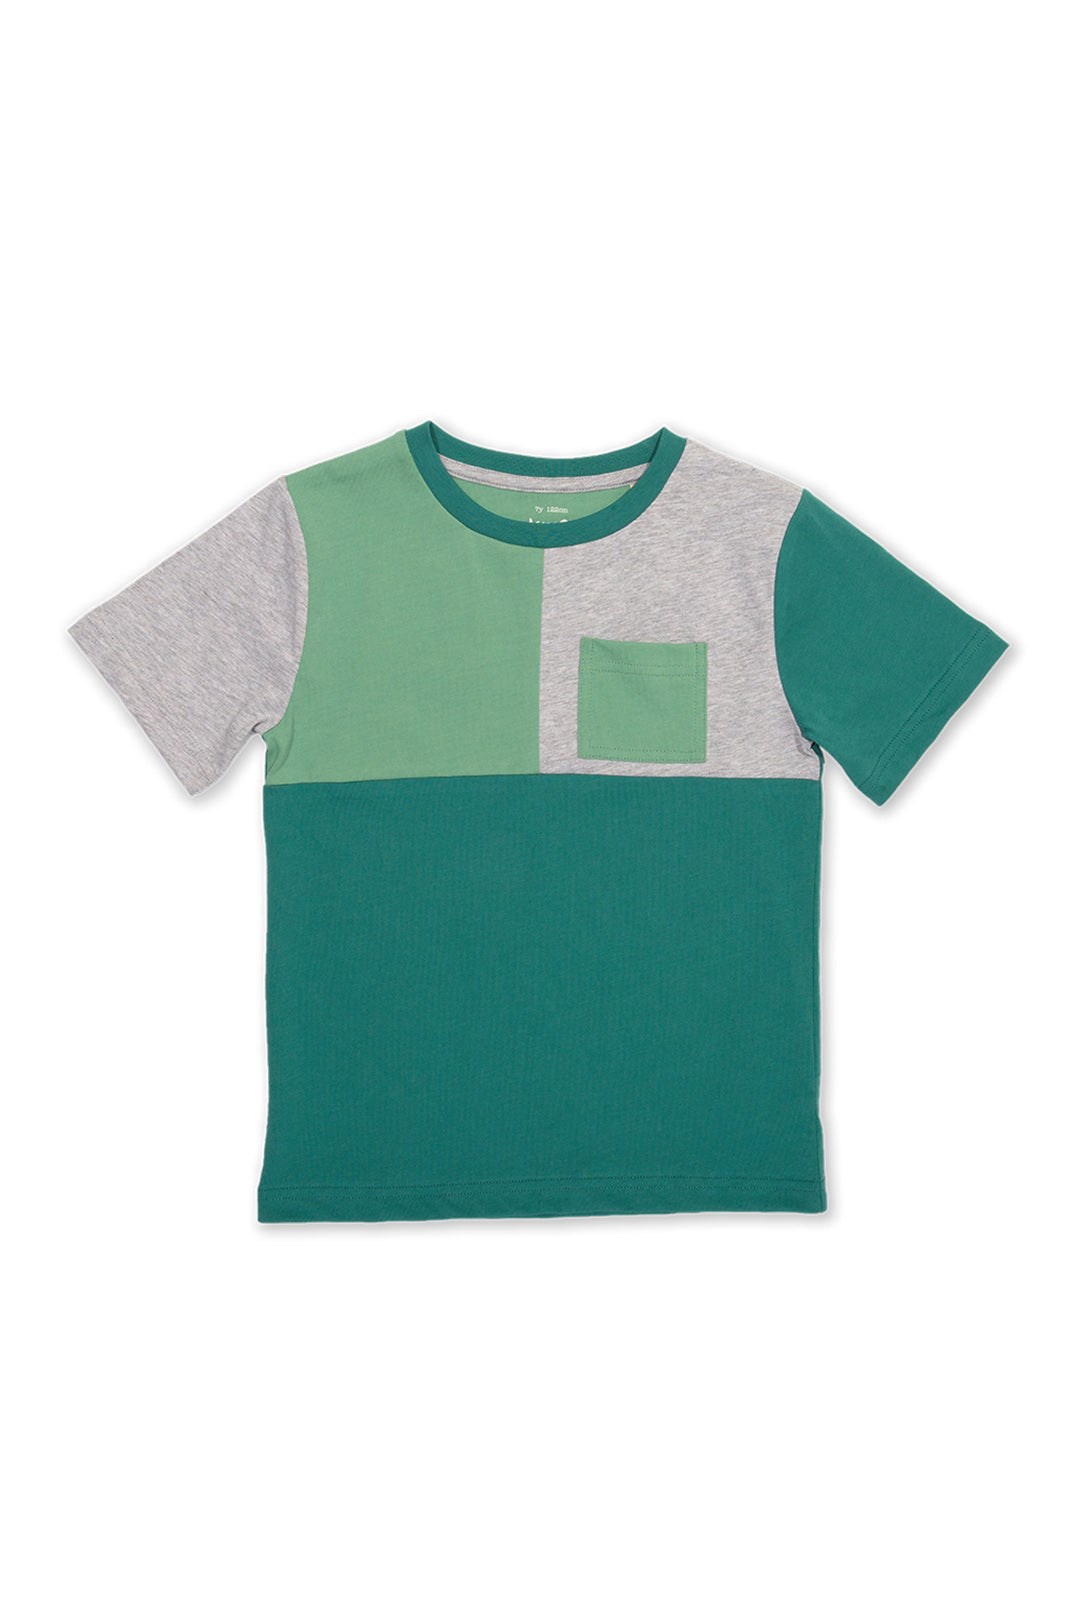 Colour Block Kids Organic Cotton T-Shirt -